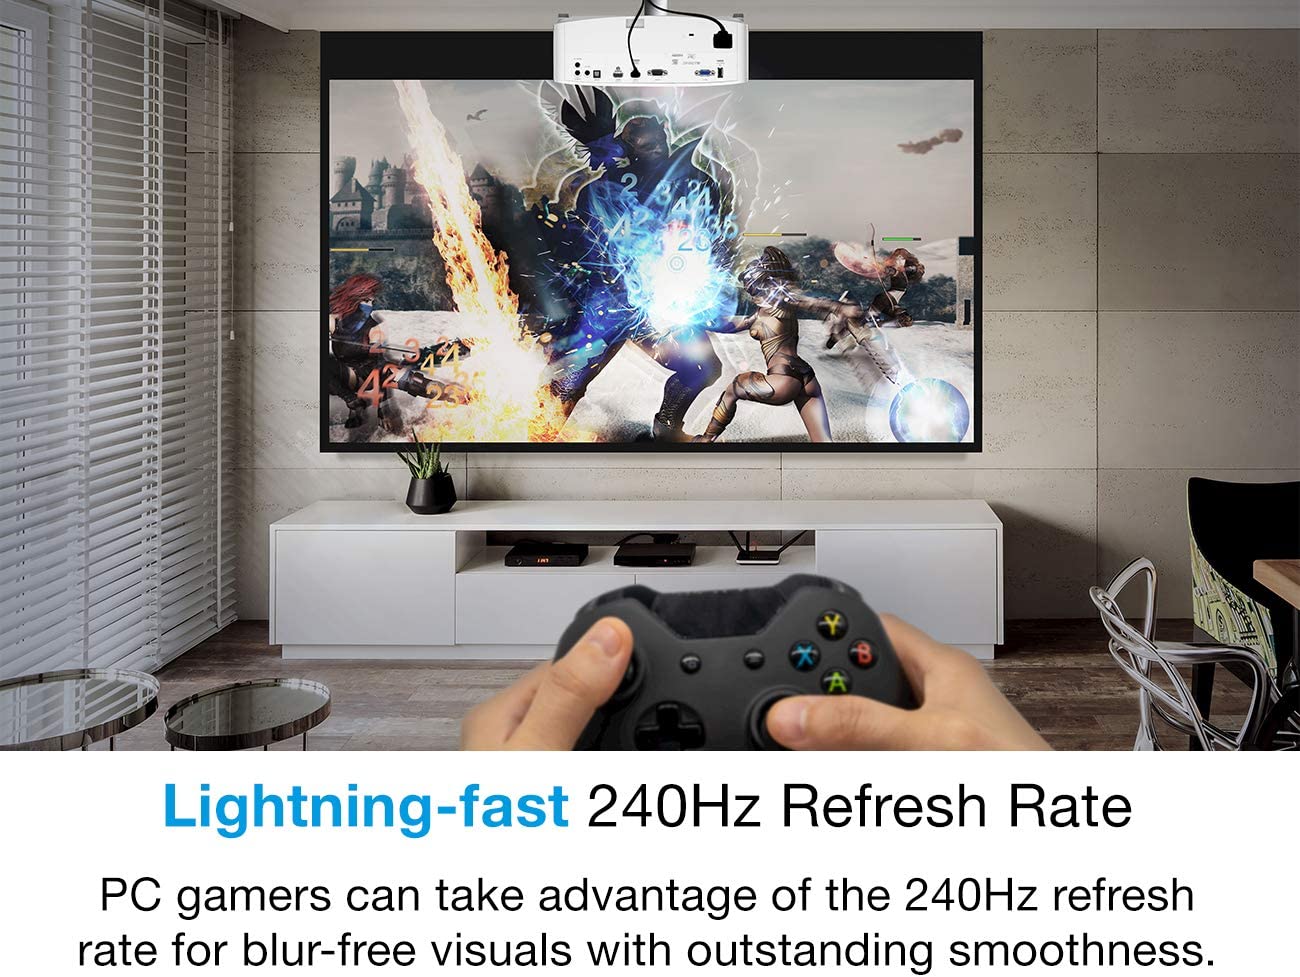 Optoma UHD38 Bright, True 4K UHD Gaming Projector